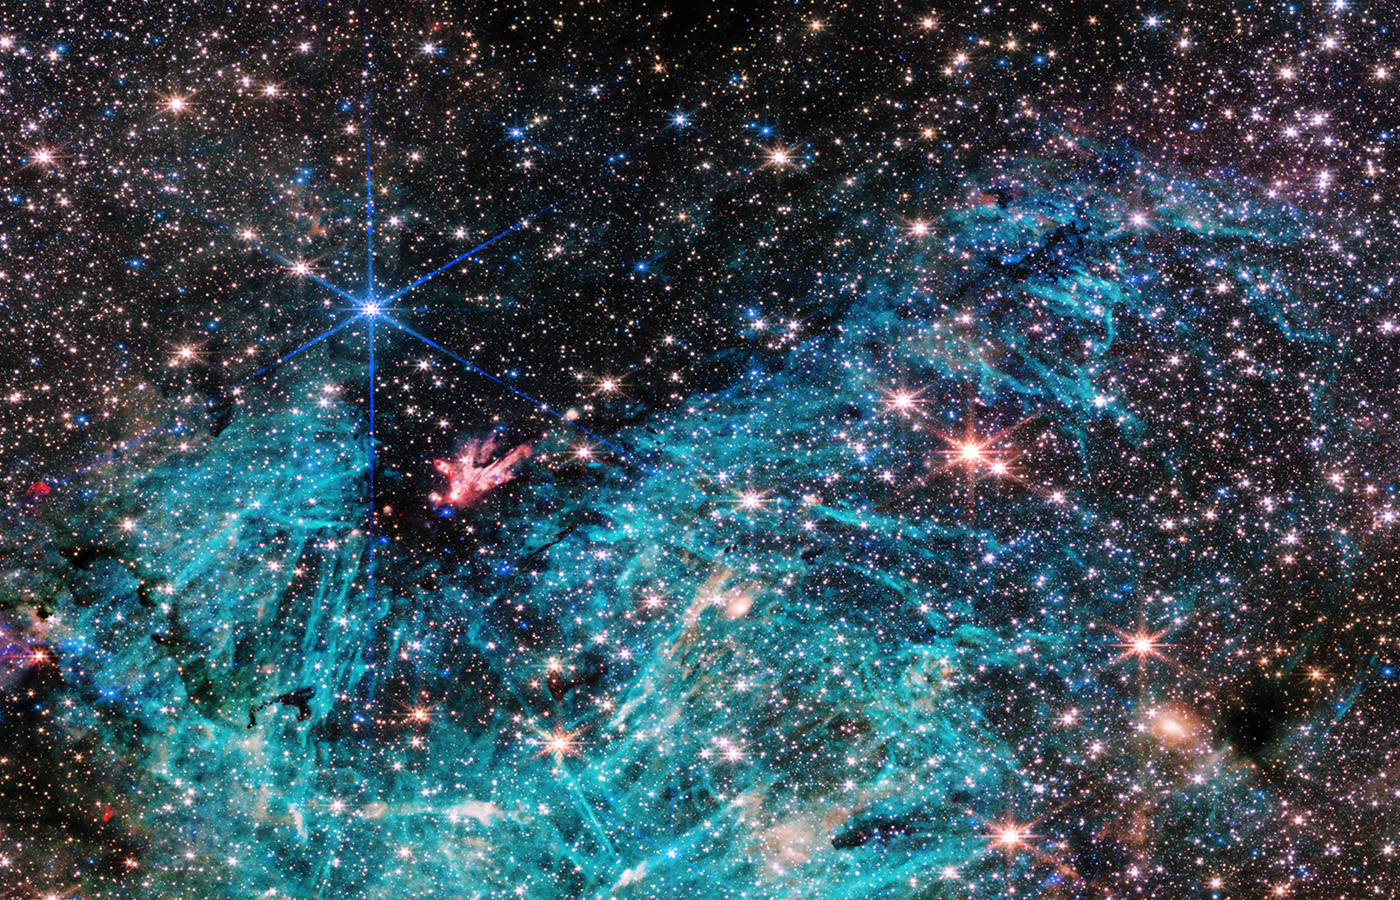 An image showing Sagittarius C